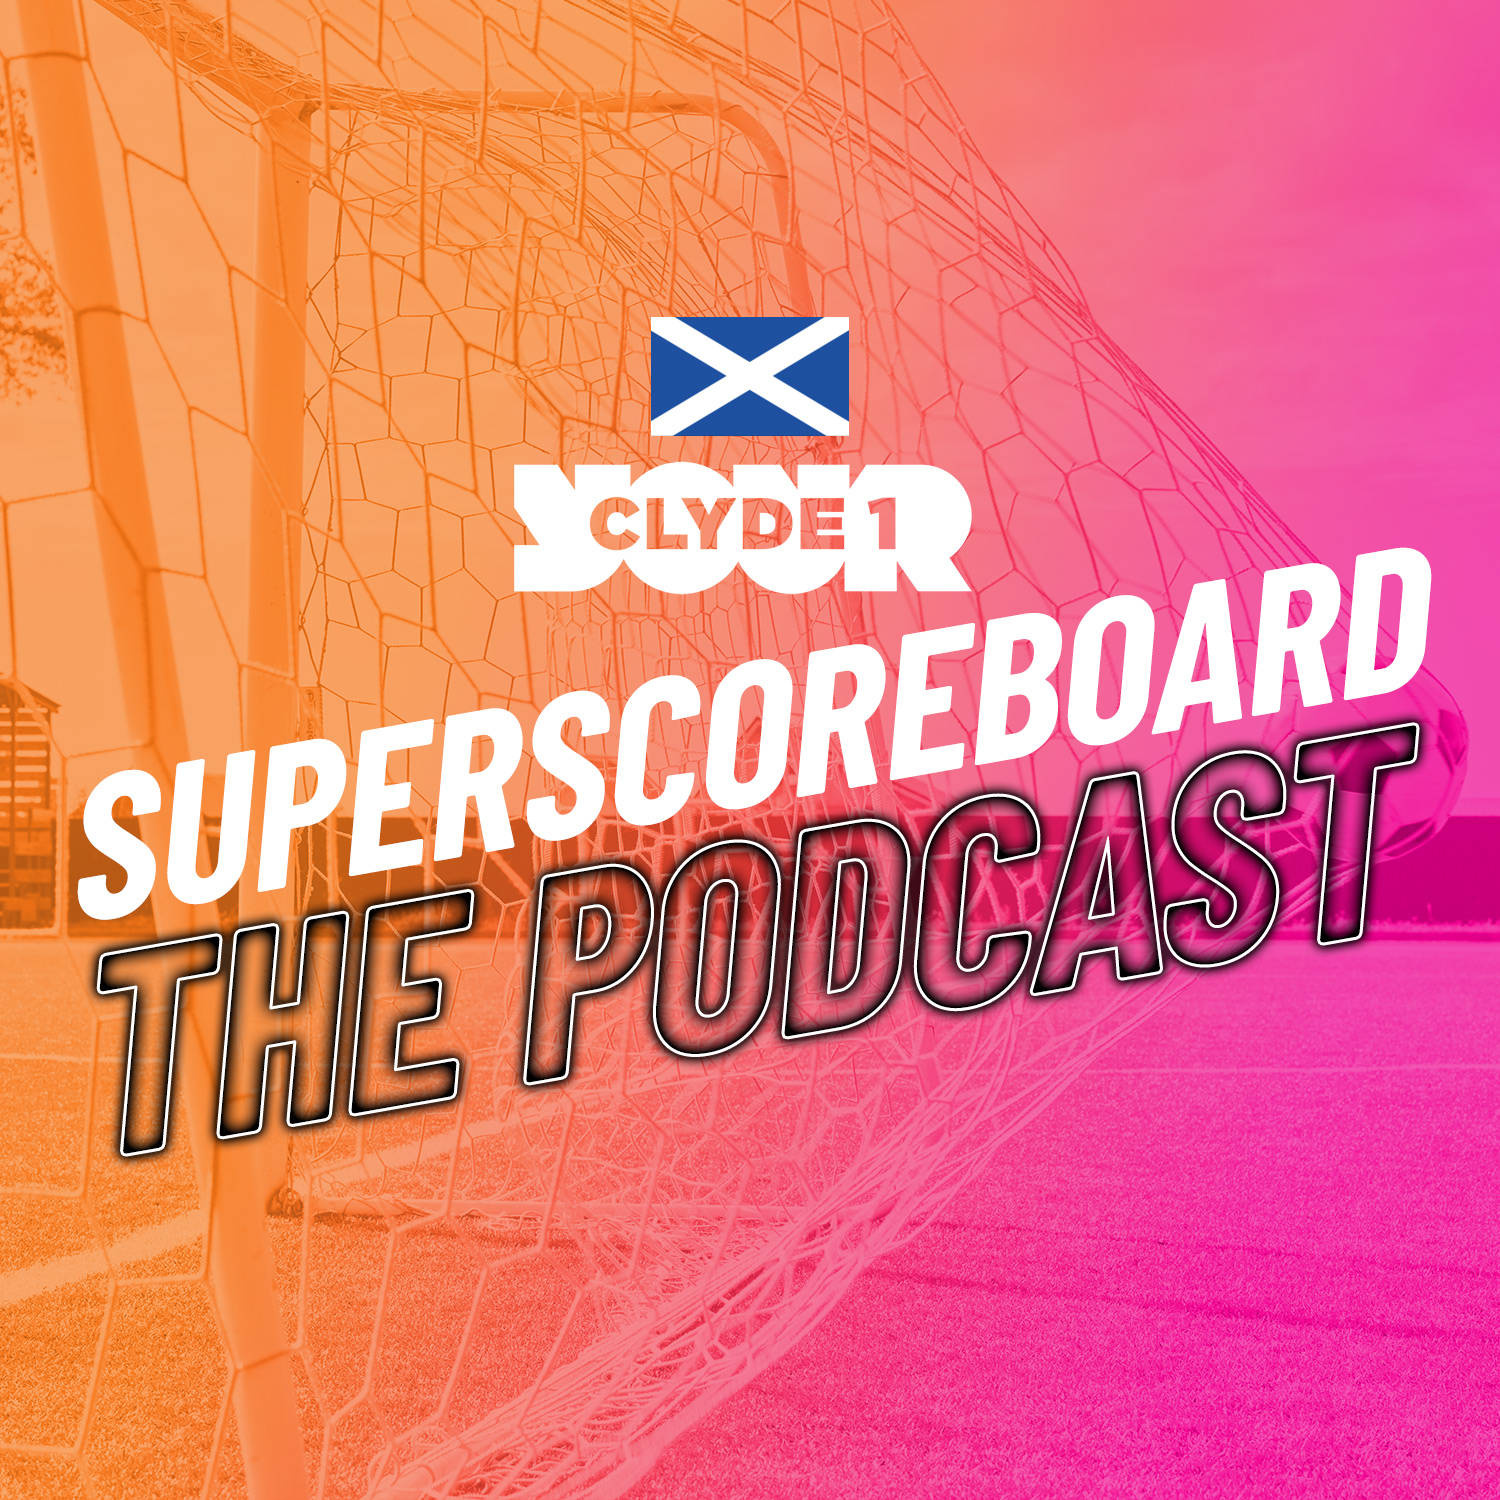 Monday 29th April Clyde 1 Superscoreboard